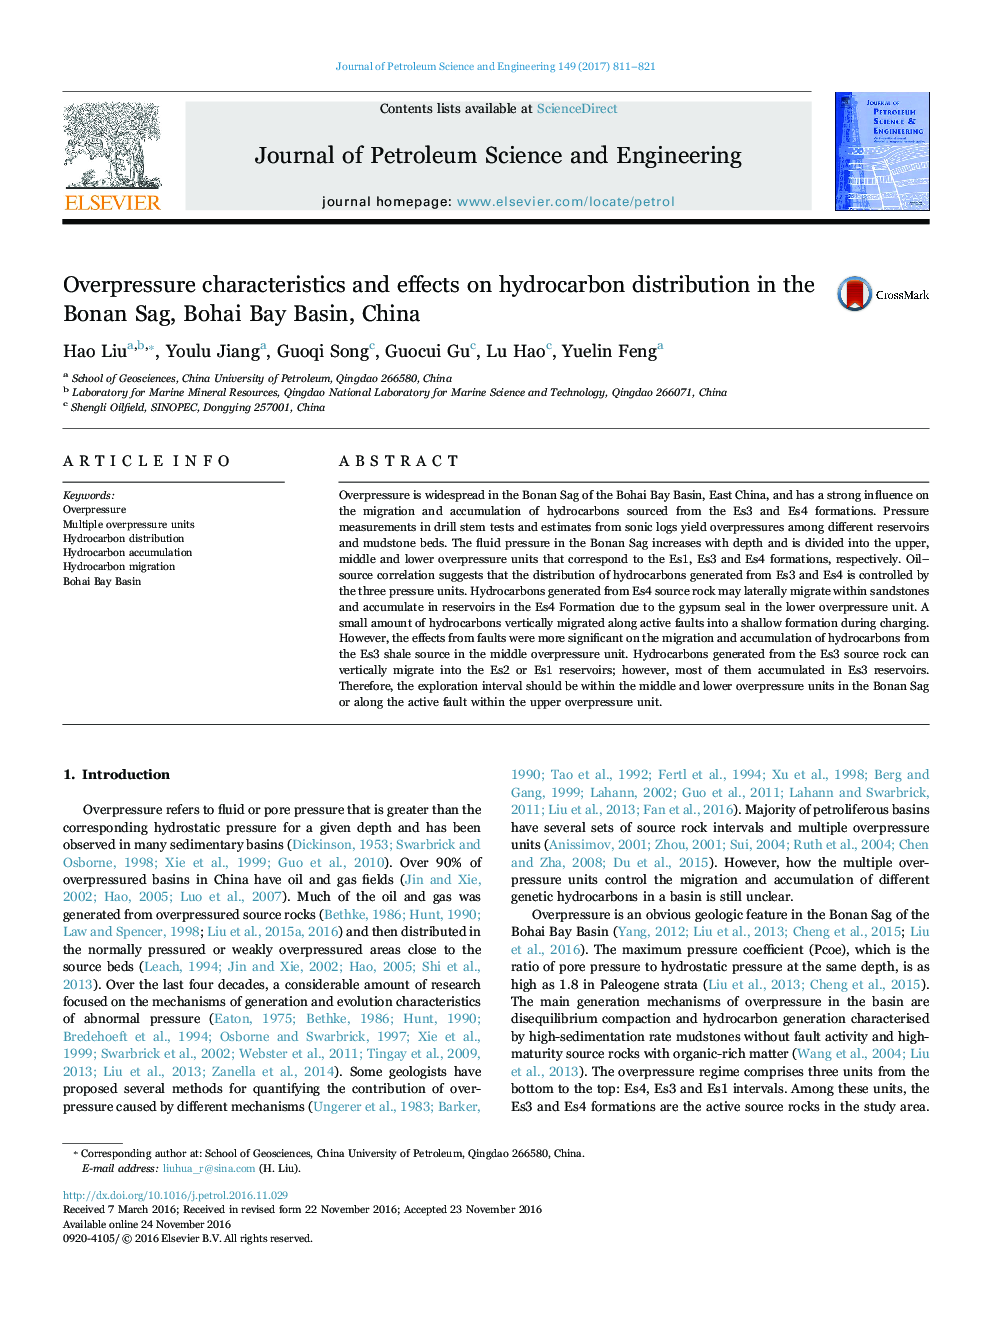 Overpressure characteristics and effects on hydrocarbon distribution in the Bonan Sag, Bohai Bay Basin, China